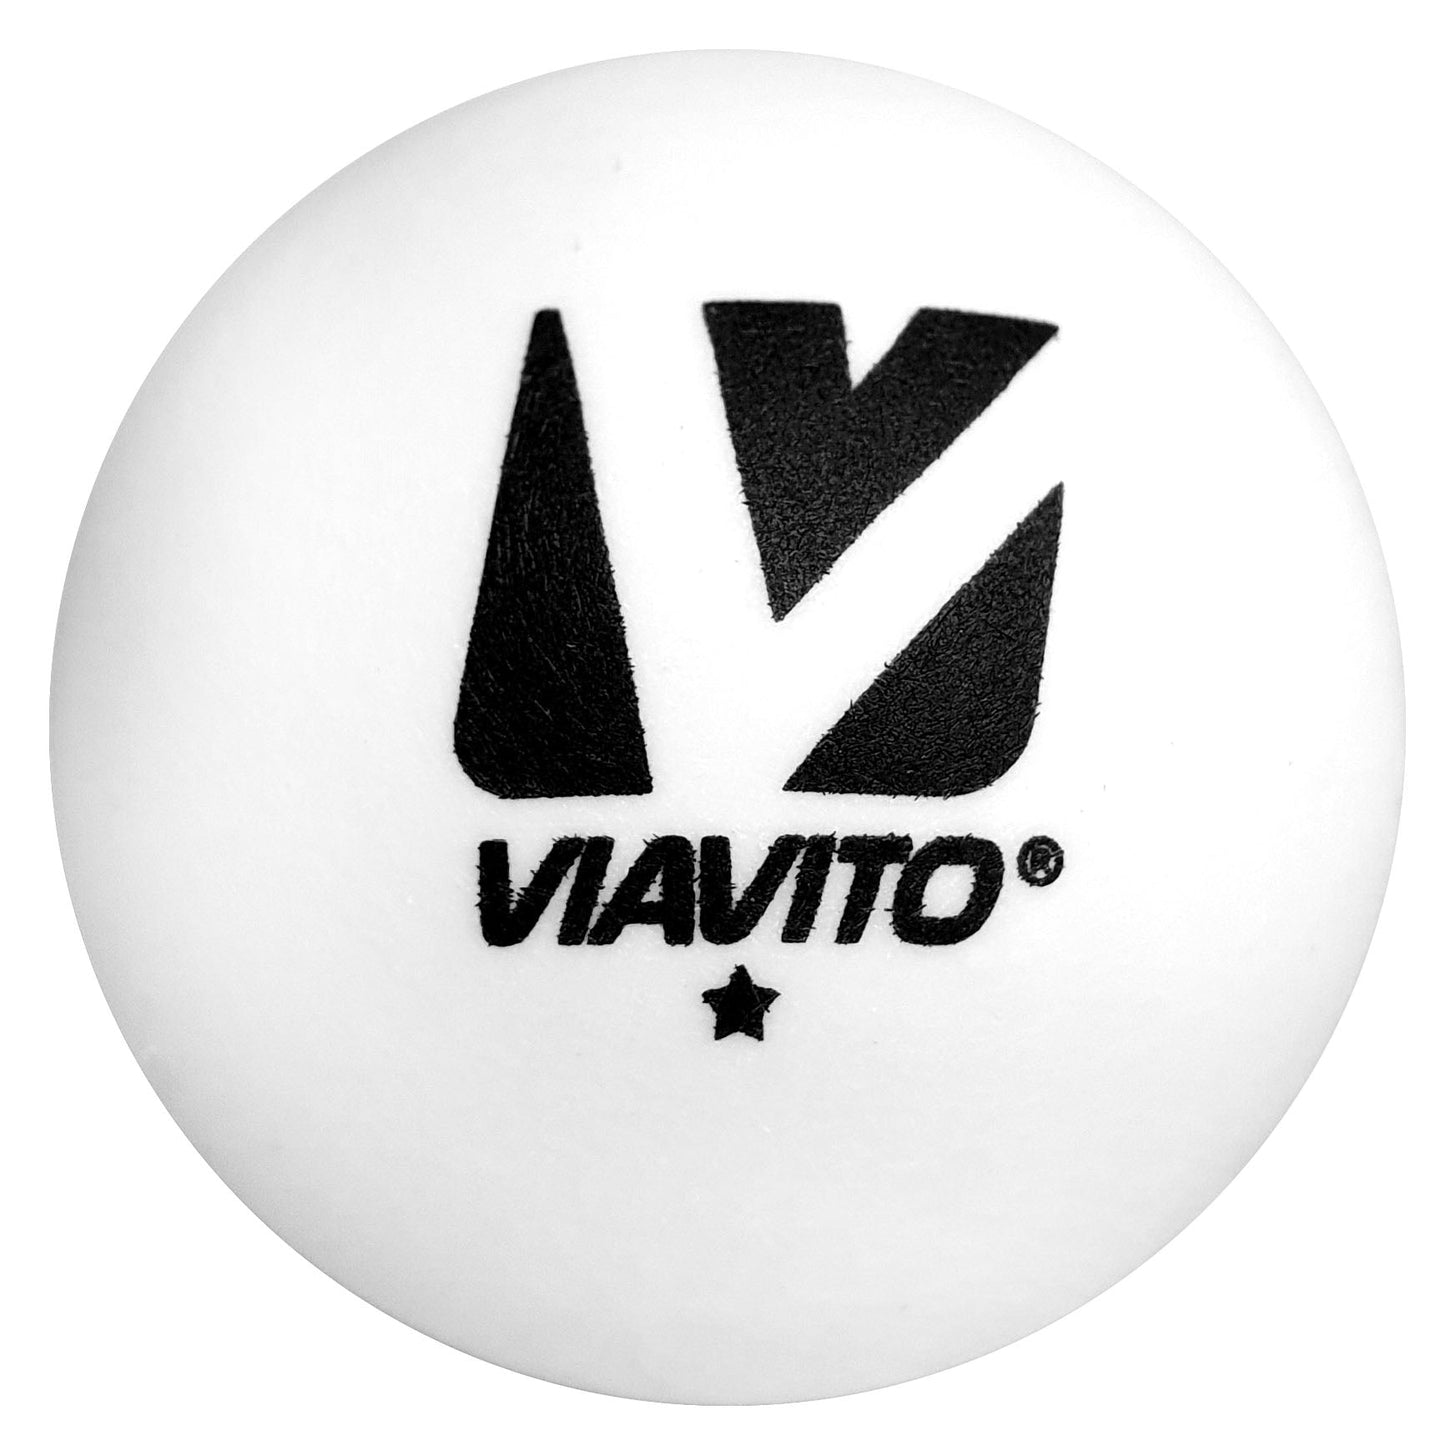 |Viavito Surefire 1 Star Table Tennis Balls - Pack of 6 - New - Ball|